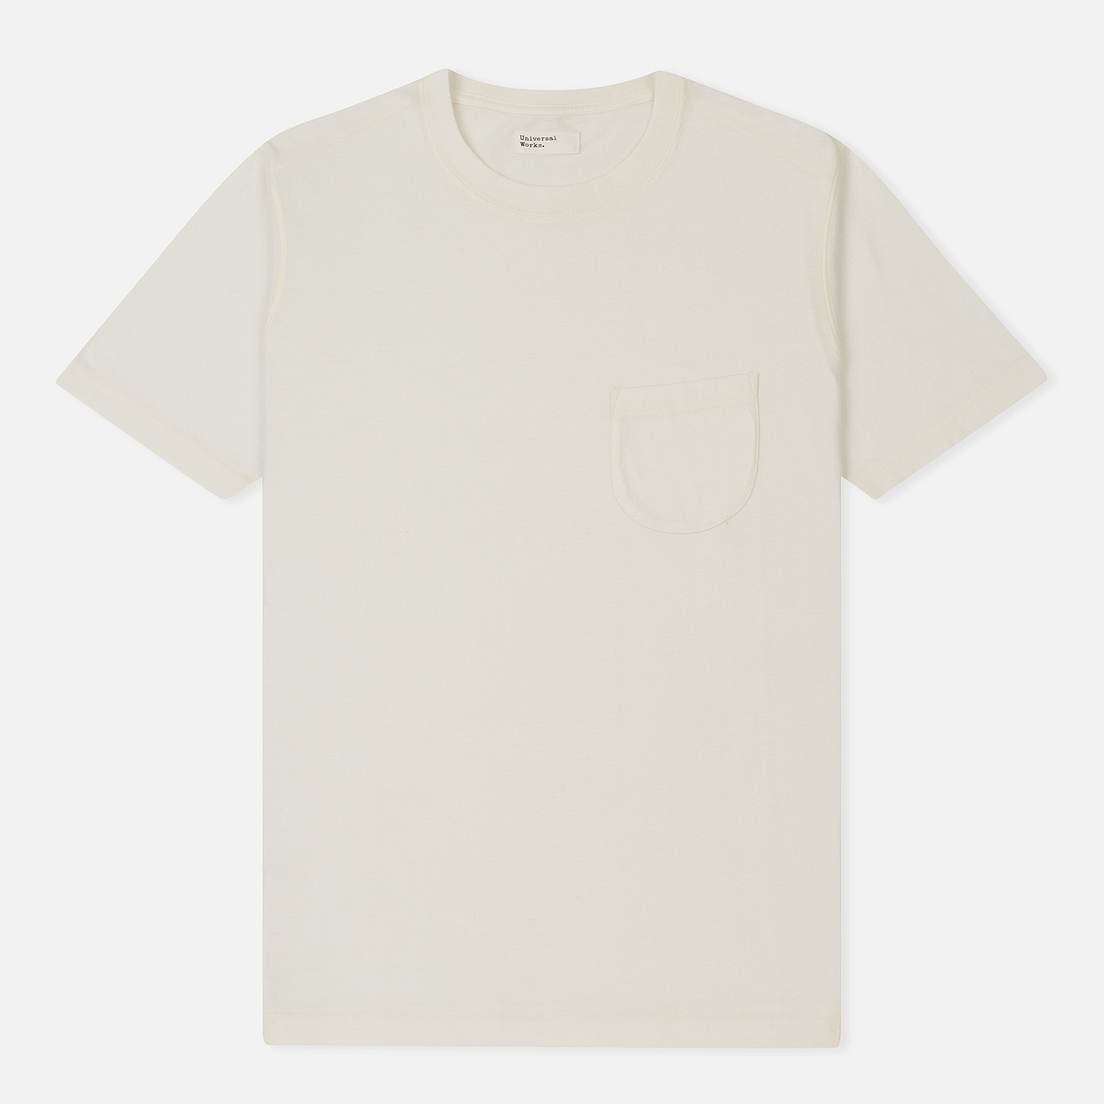 Universal Works Мужская футболка Pocket Single Jersey